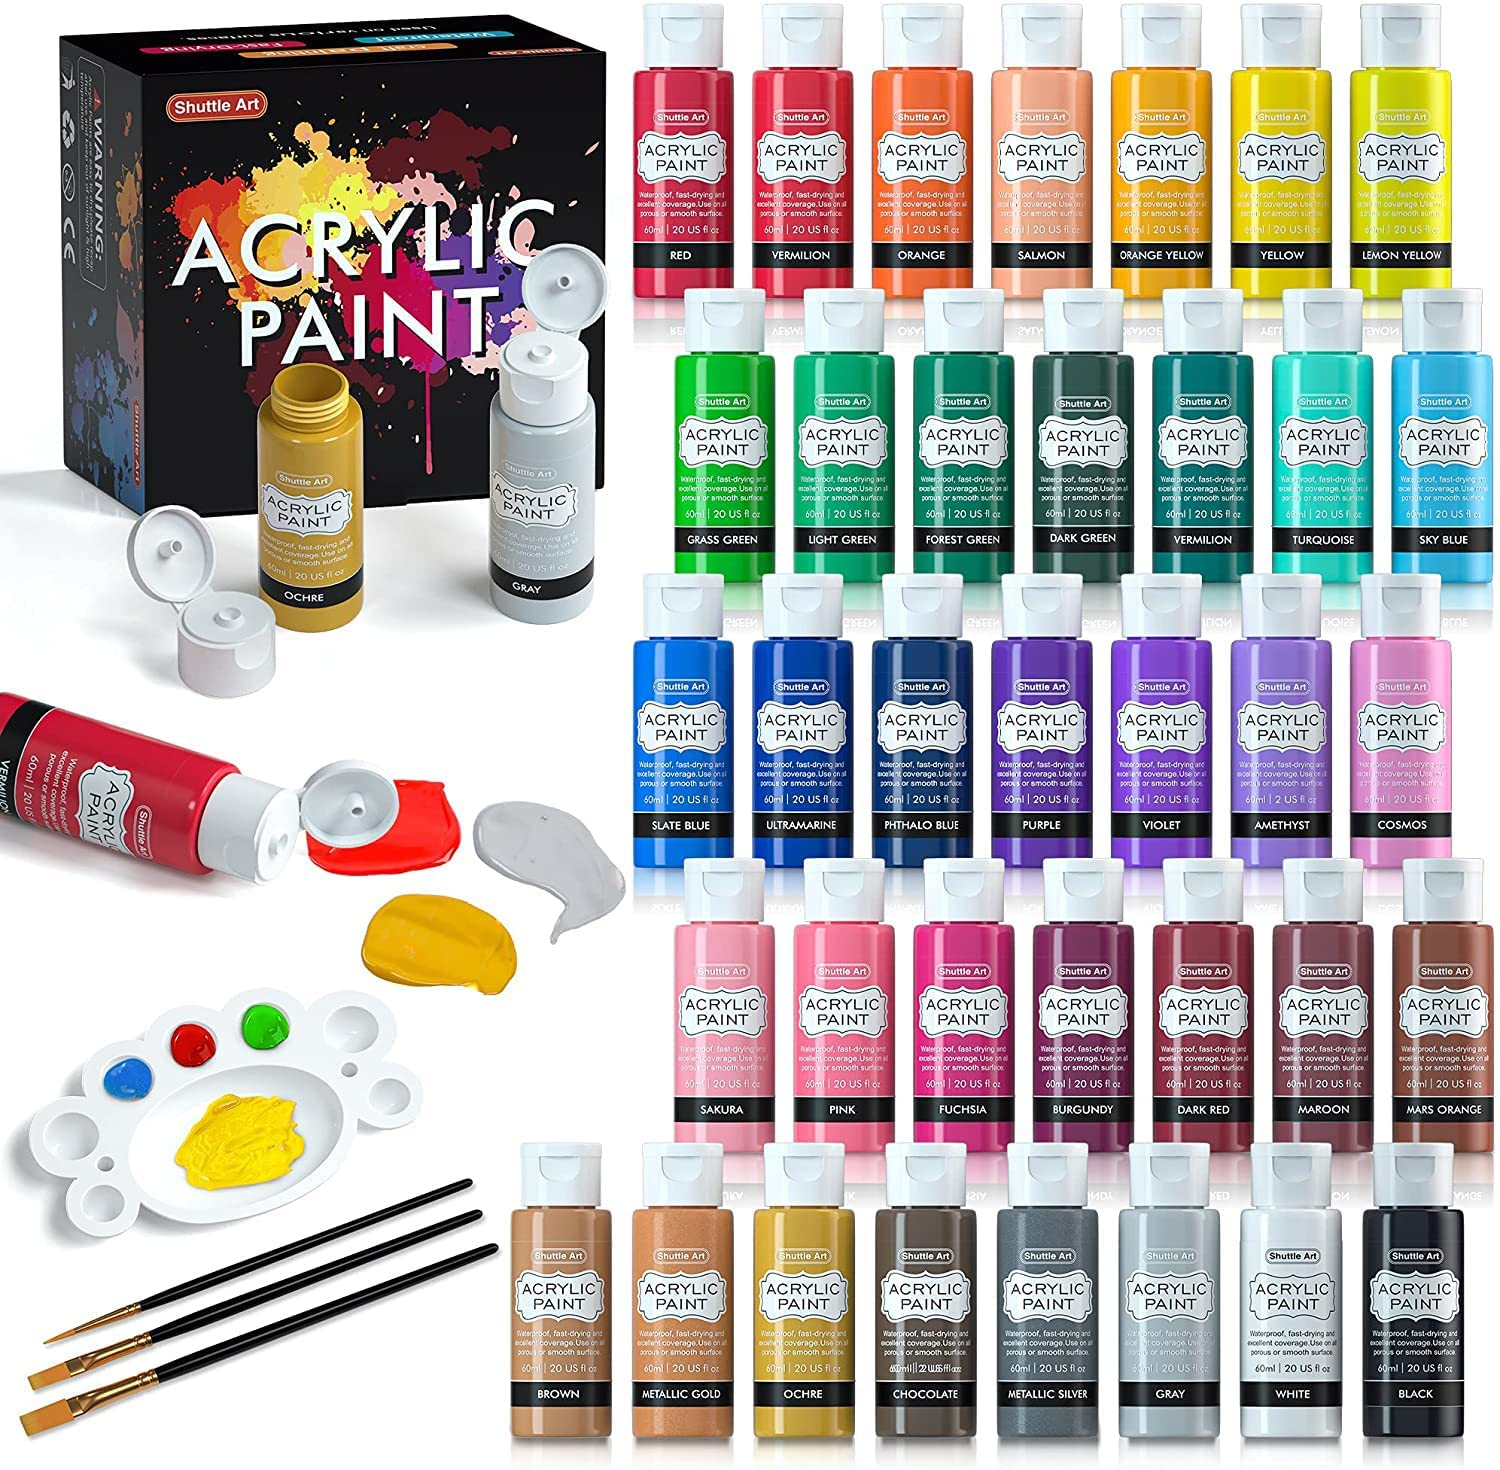 Acrylic Paint Set, Shuttle Art 36 Colors (60ml, 2oz) with 3